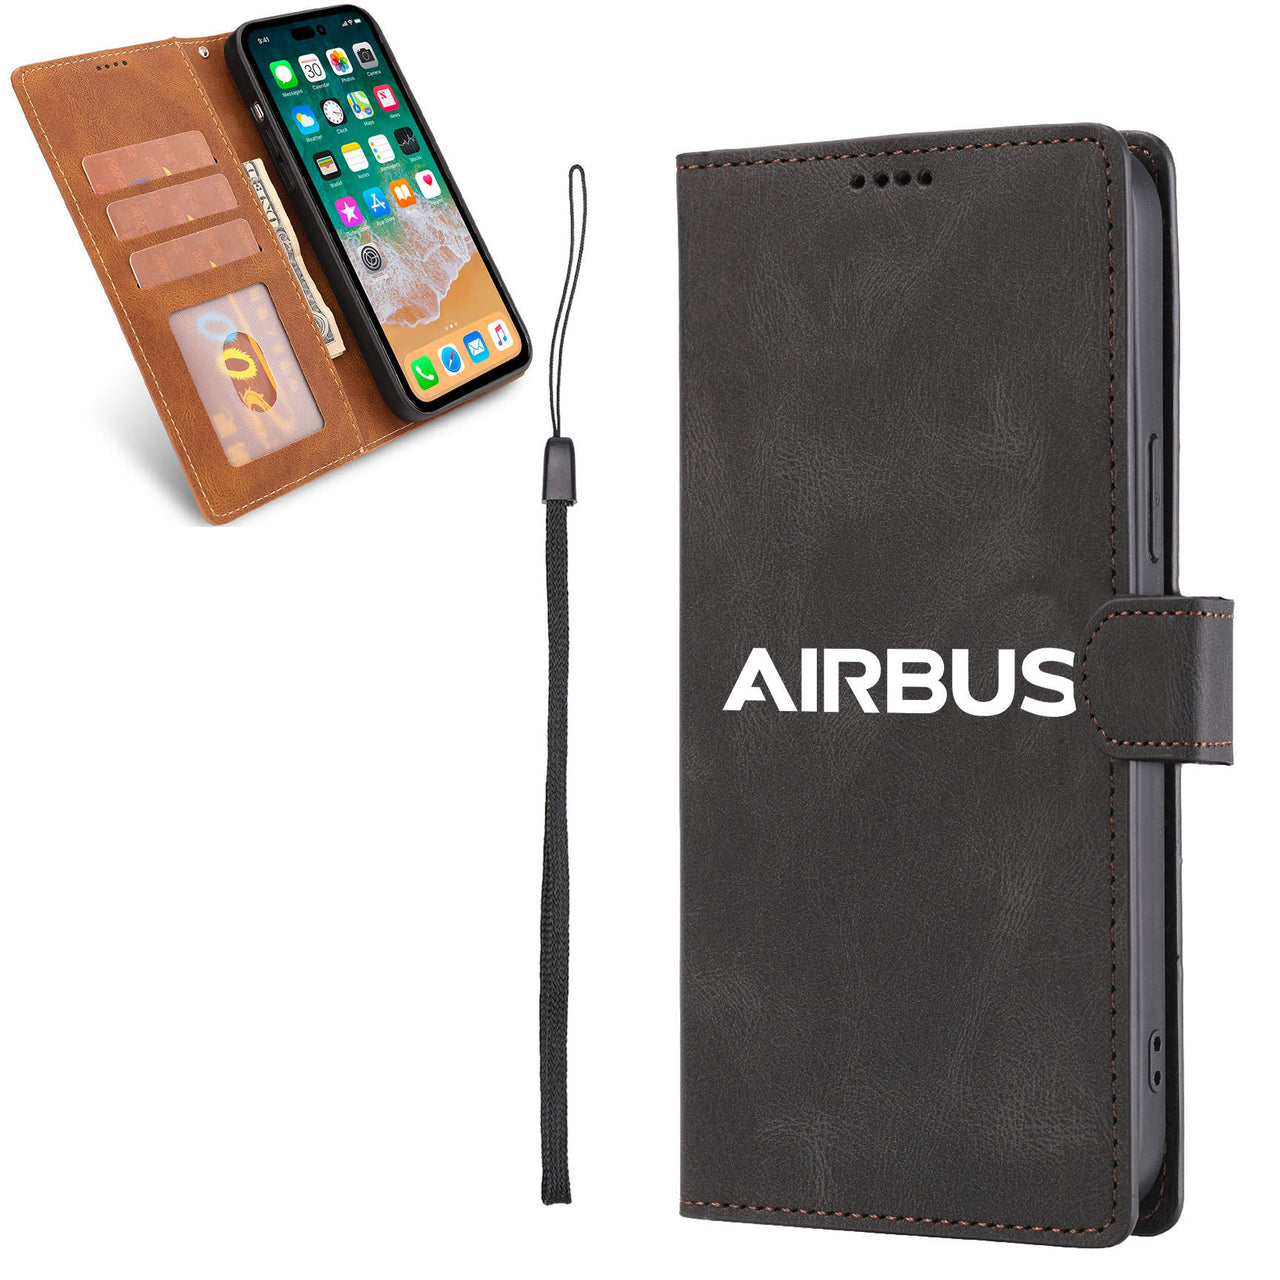 Airbus & Text Designed Leather iPhone Cases